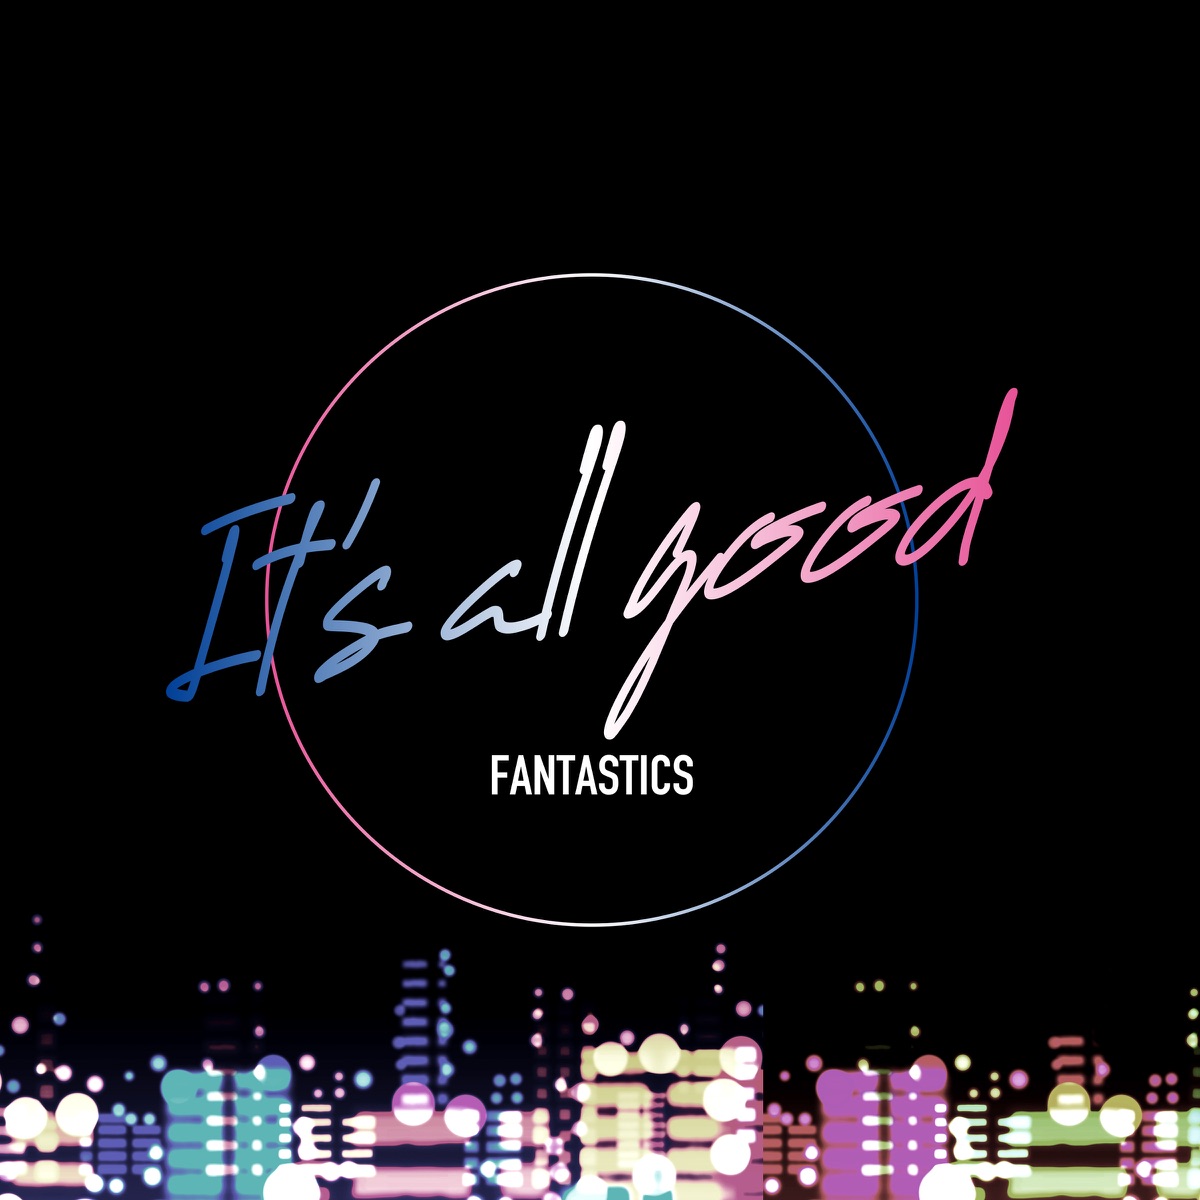 『FANTASTICS - It's all good』収録の『It's all good』ジャケット